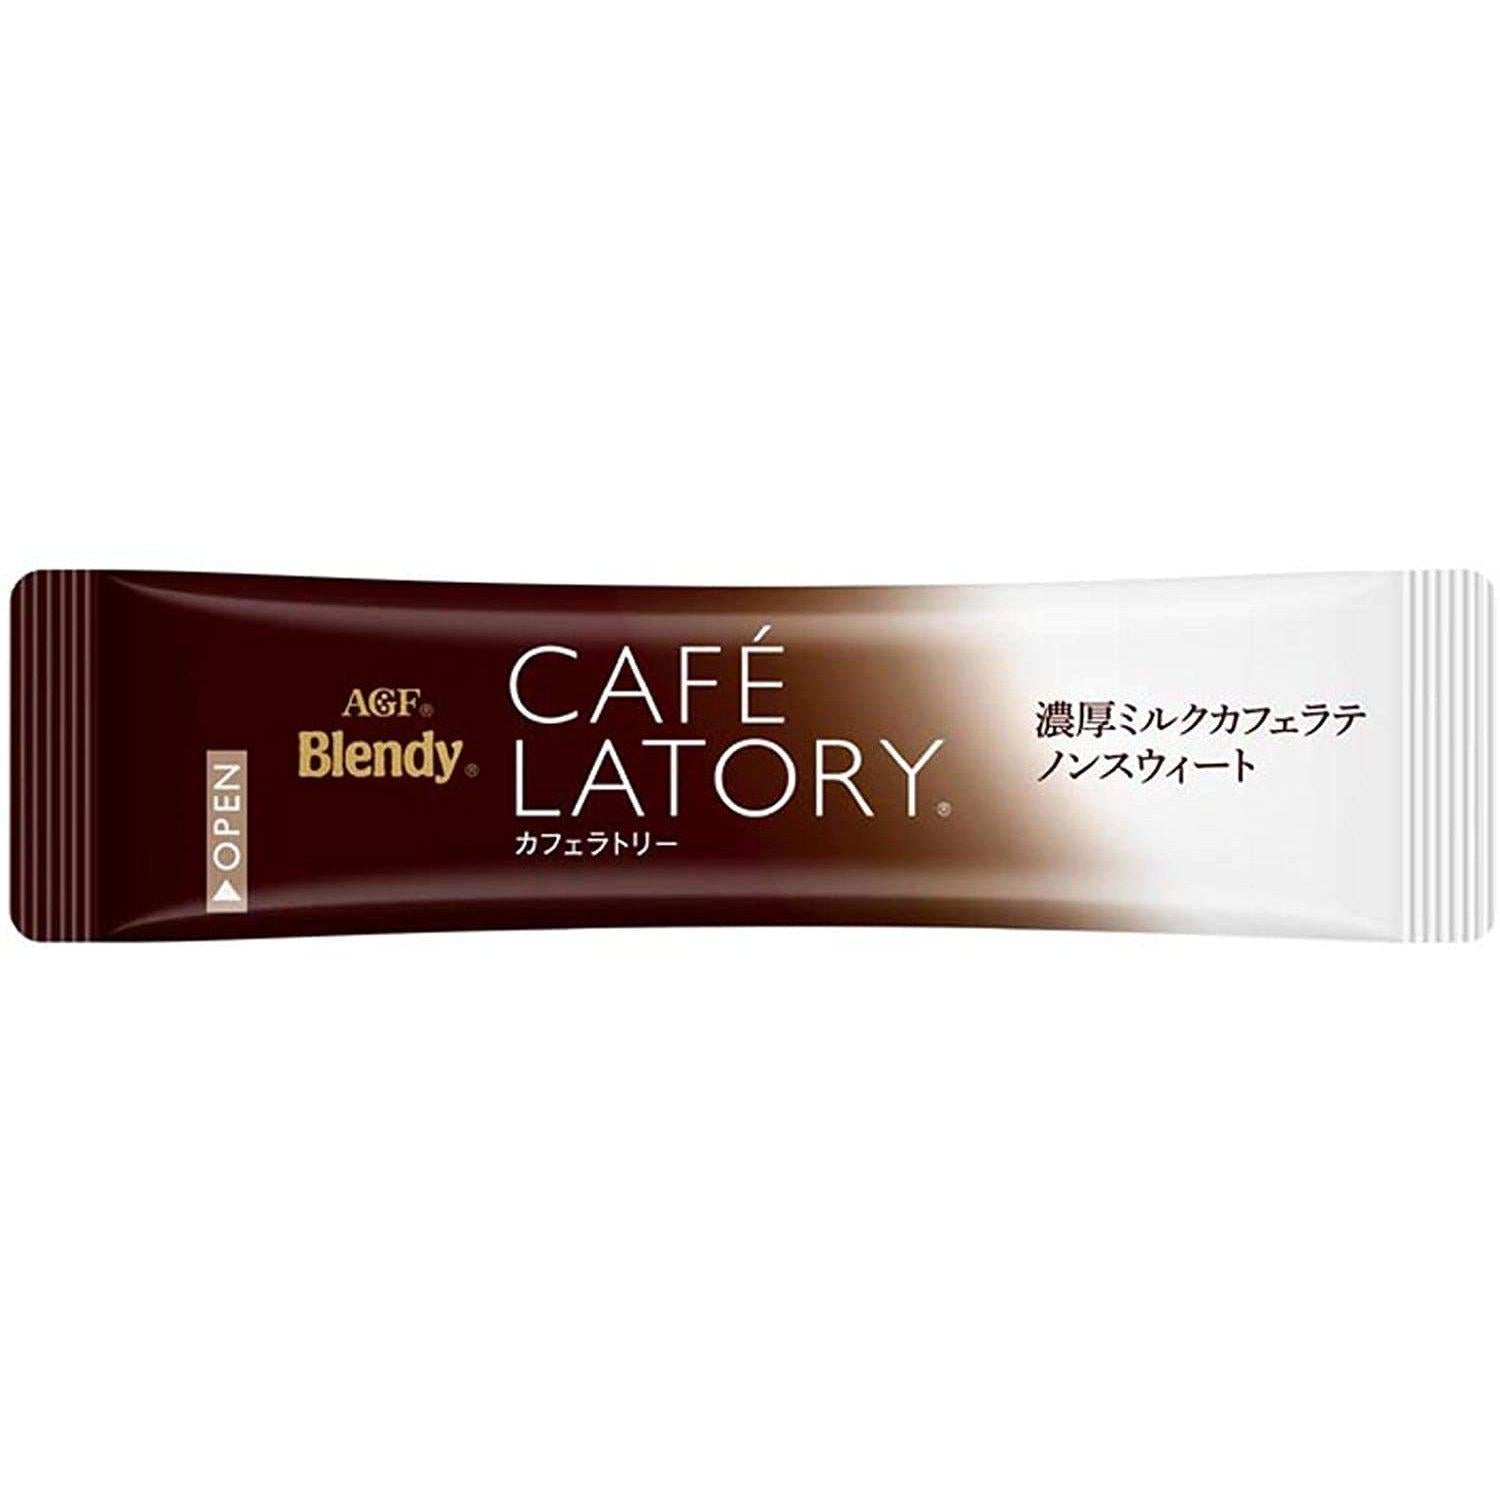 AGF Blendy Café Latory Rich Milk Cafe Latte Unsweetened 18 Sticks